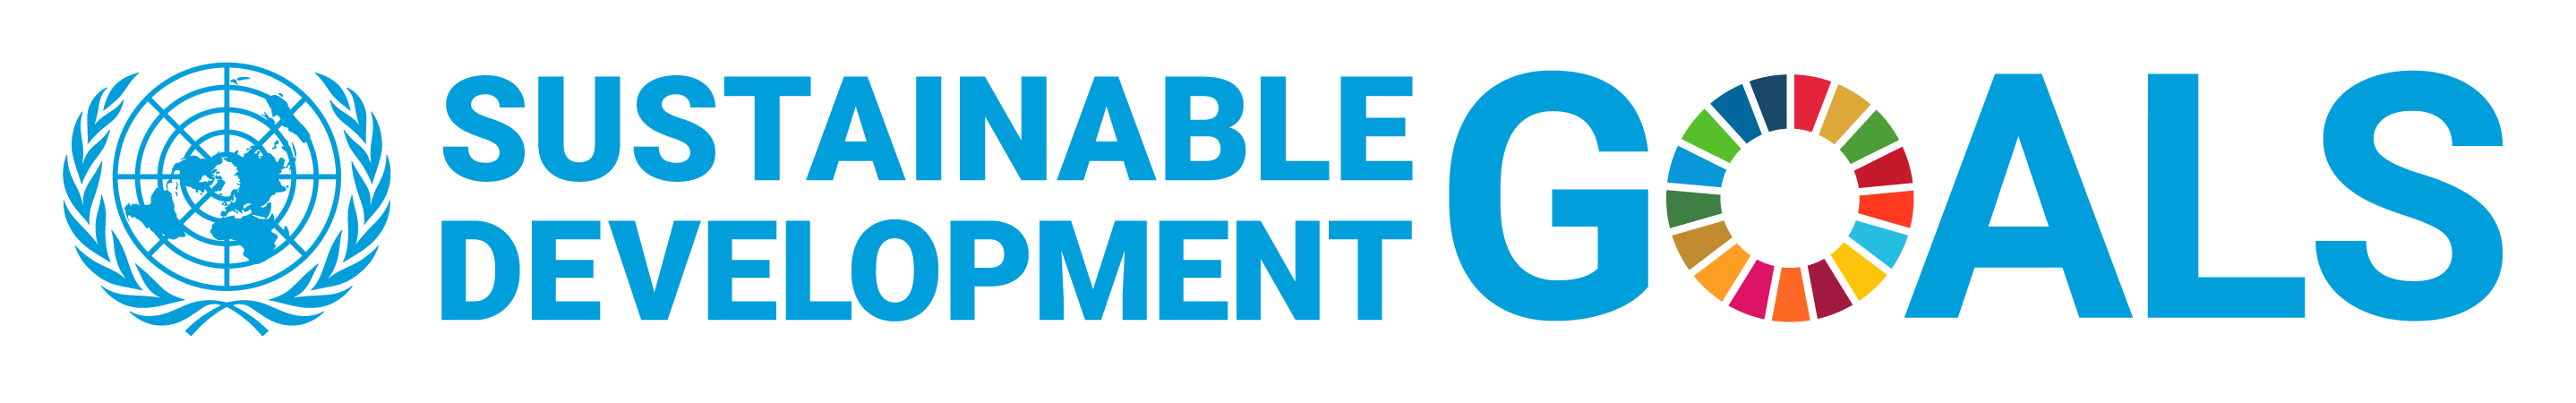 UN logotype for sustainable development.